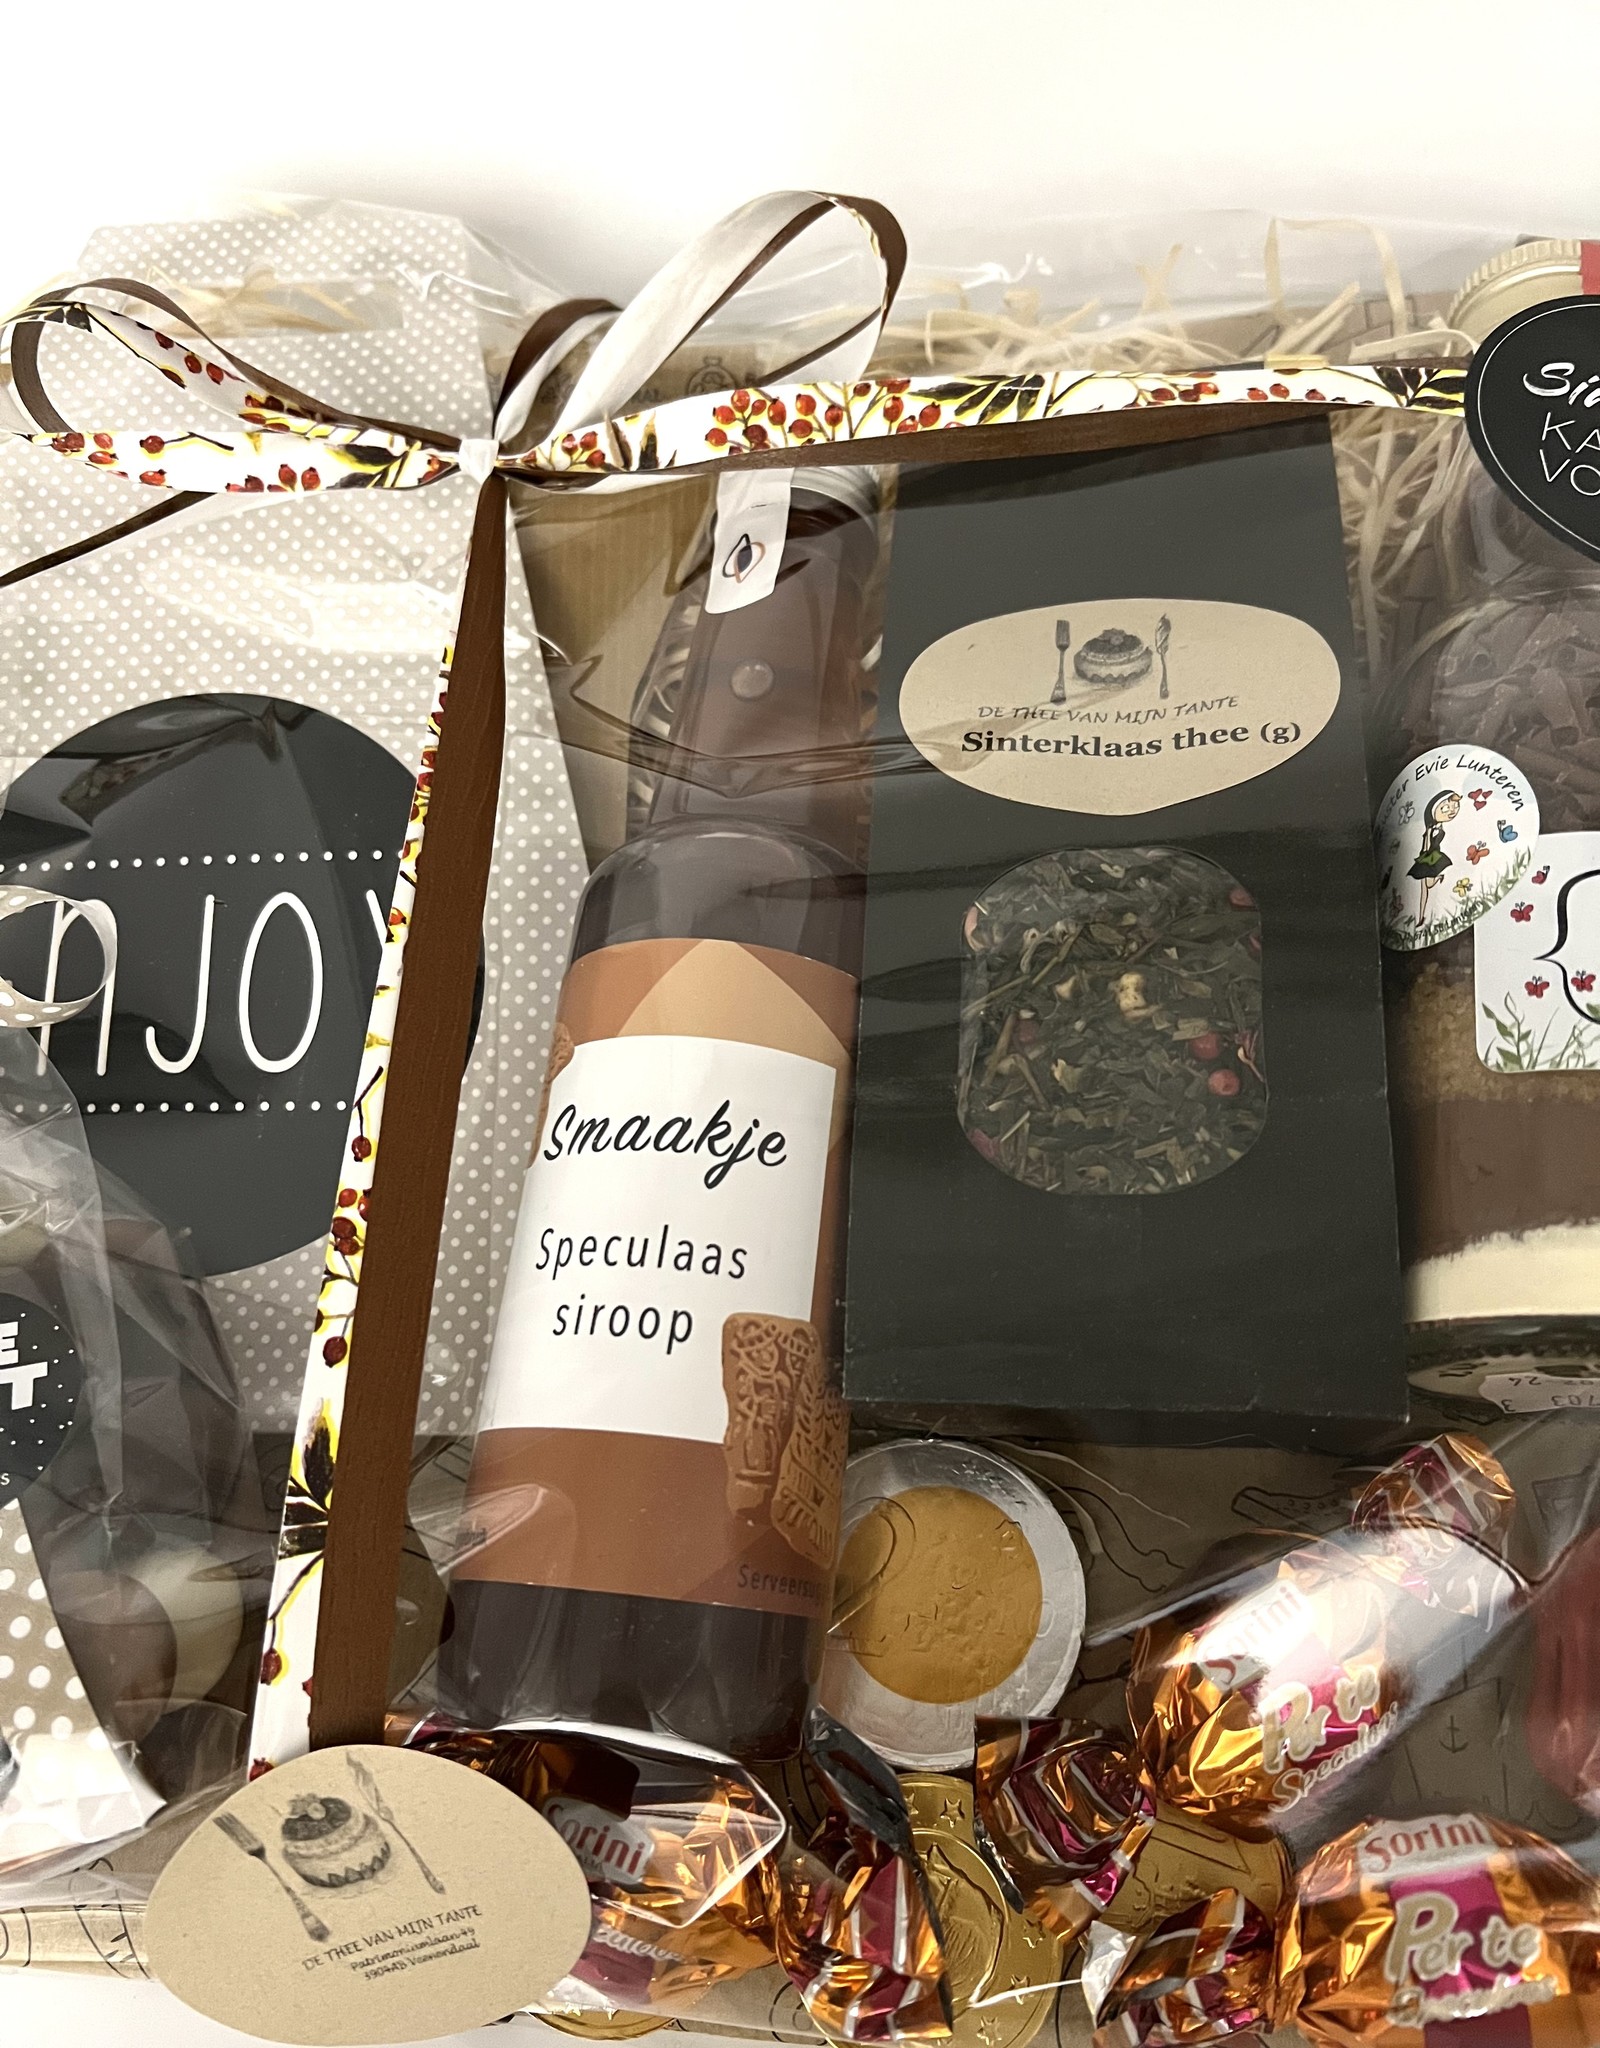 Sinterklaaspakket groot met koffie en thee chocolademelk en diverse lekkernijen